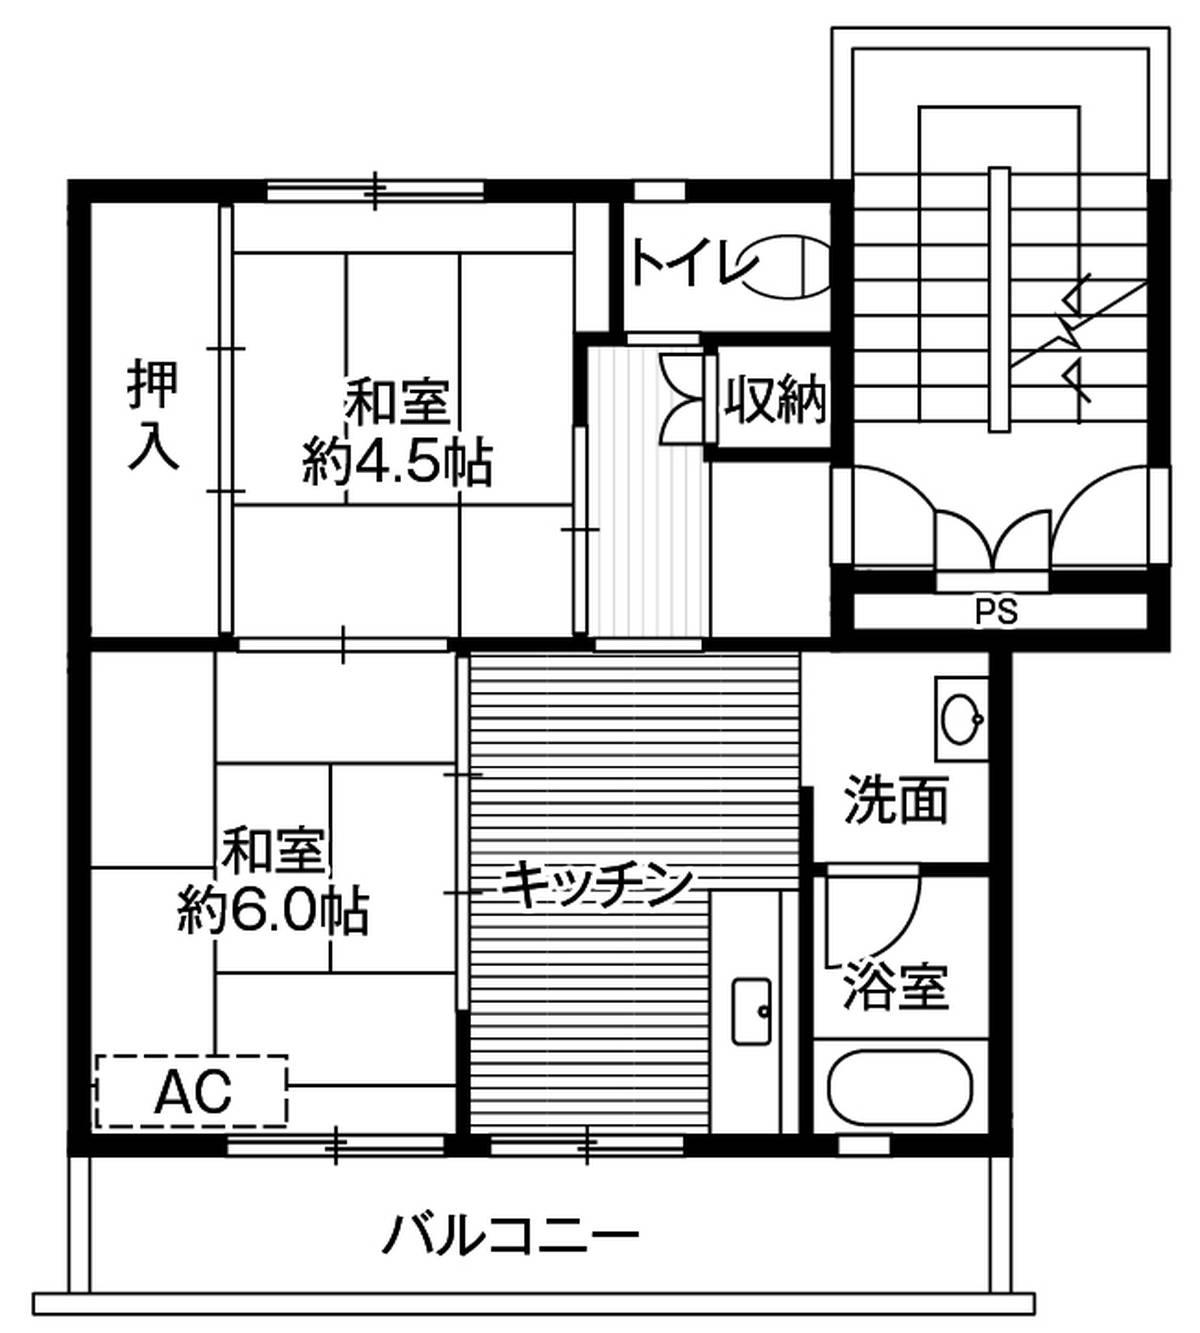 2DK floorplan of Village House Osarizawa in Kazuno-shi